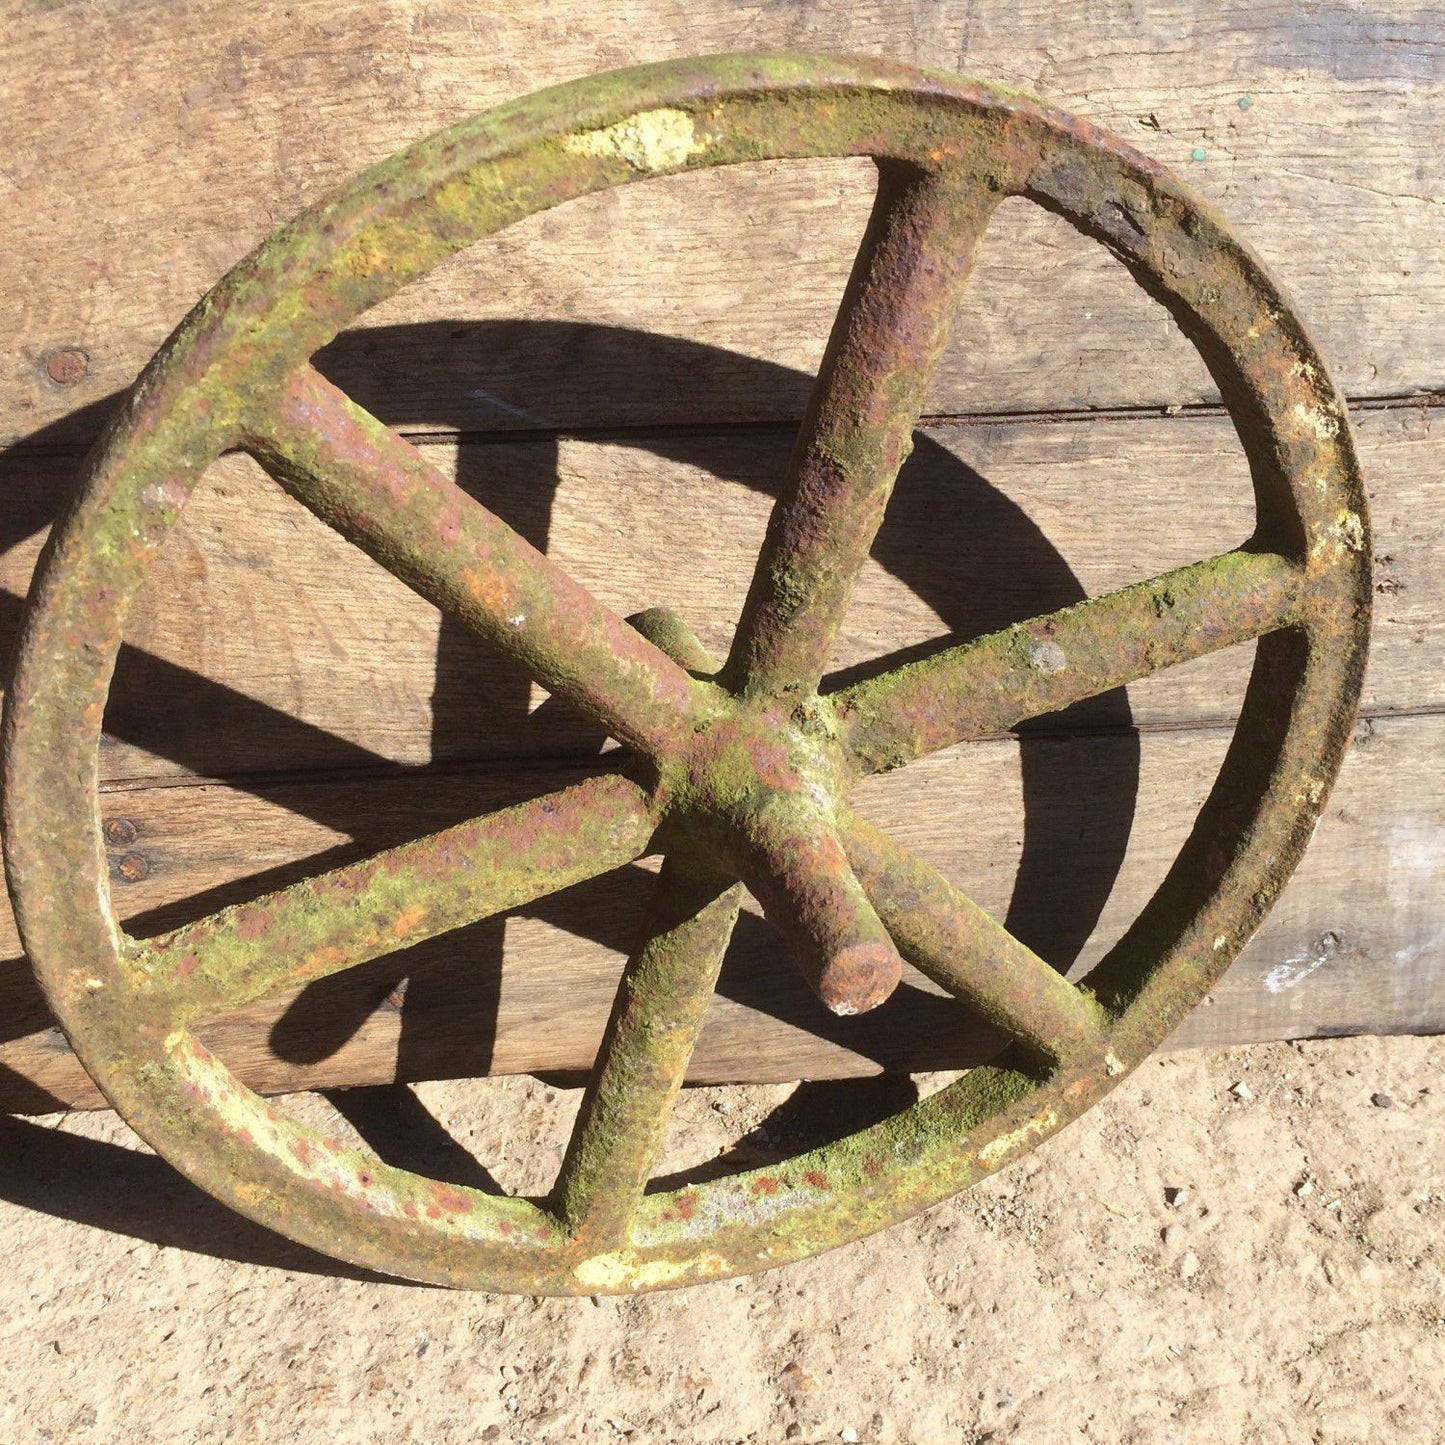 Old Early Victorian Cast Iron 6 Spoke Implement Wheelbarrow Wheel Ornament 14”